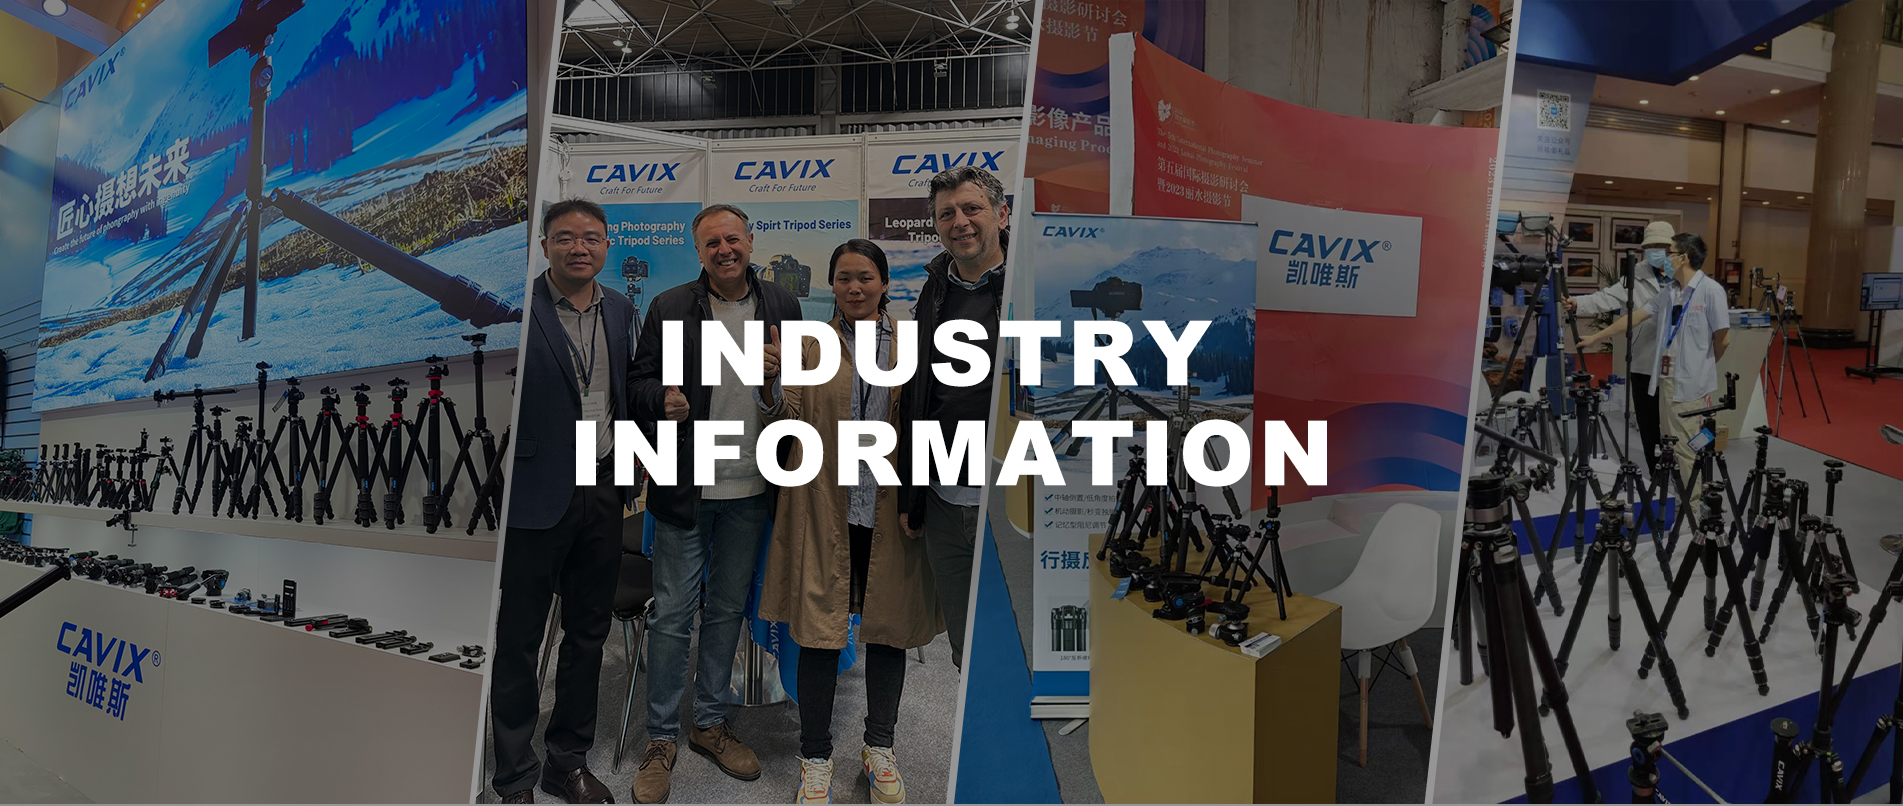 Industry information